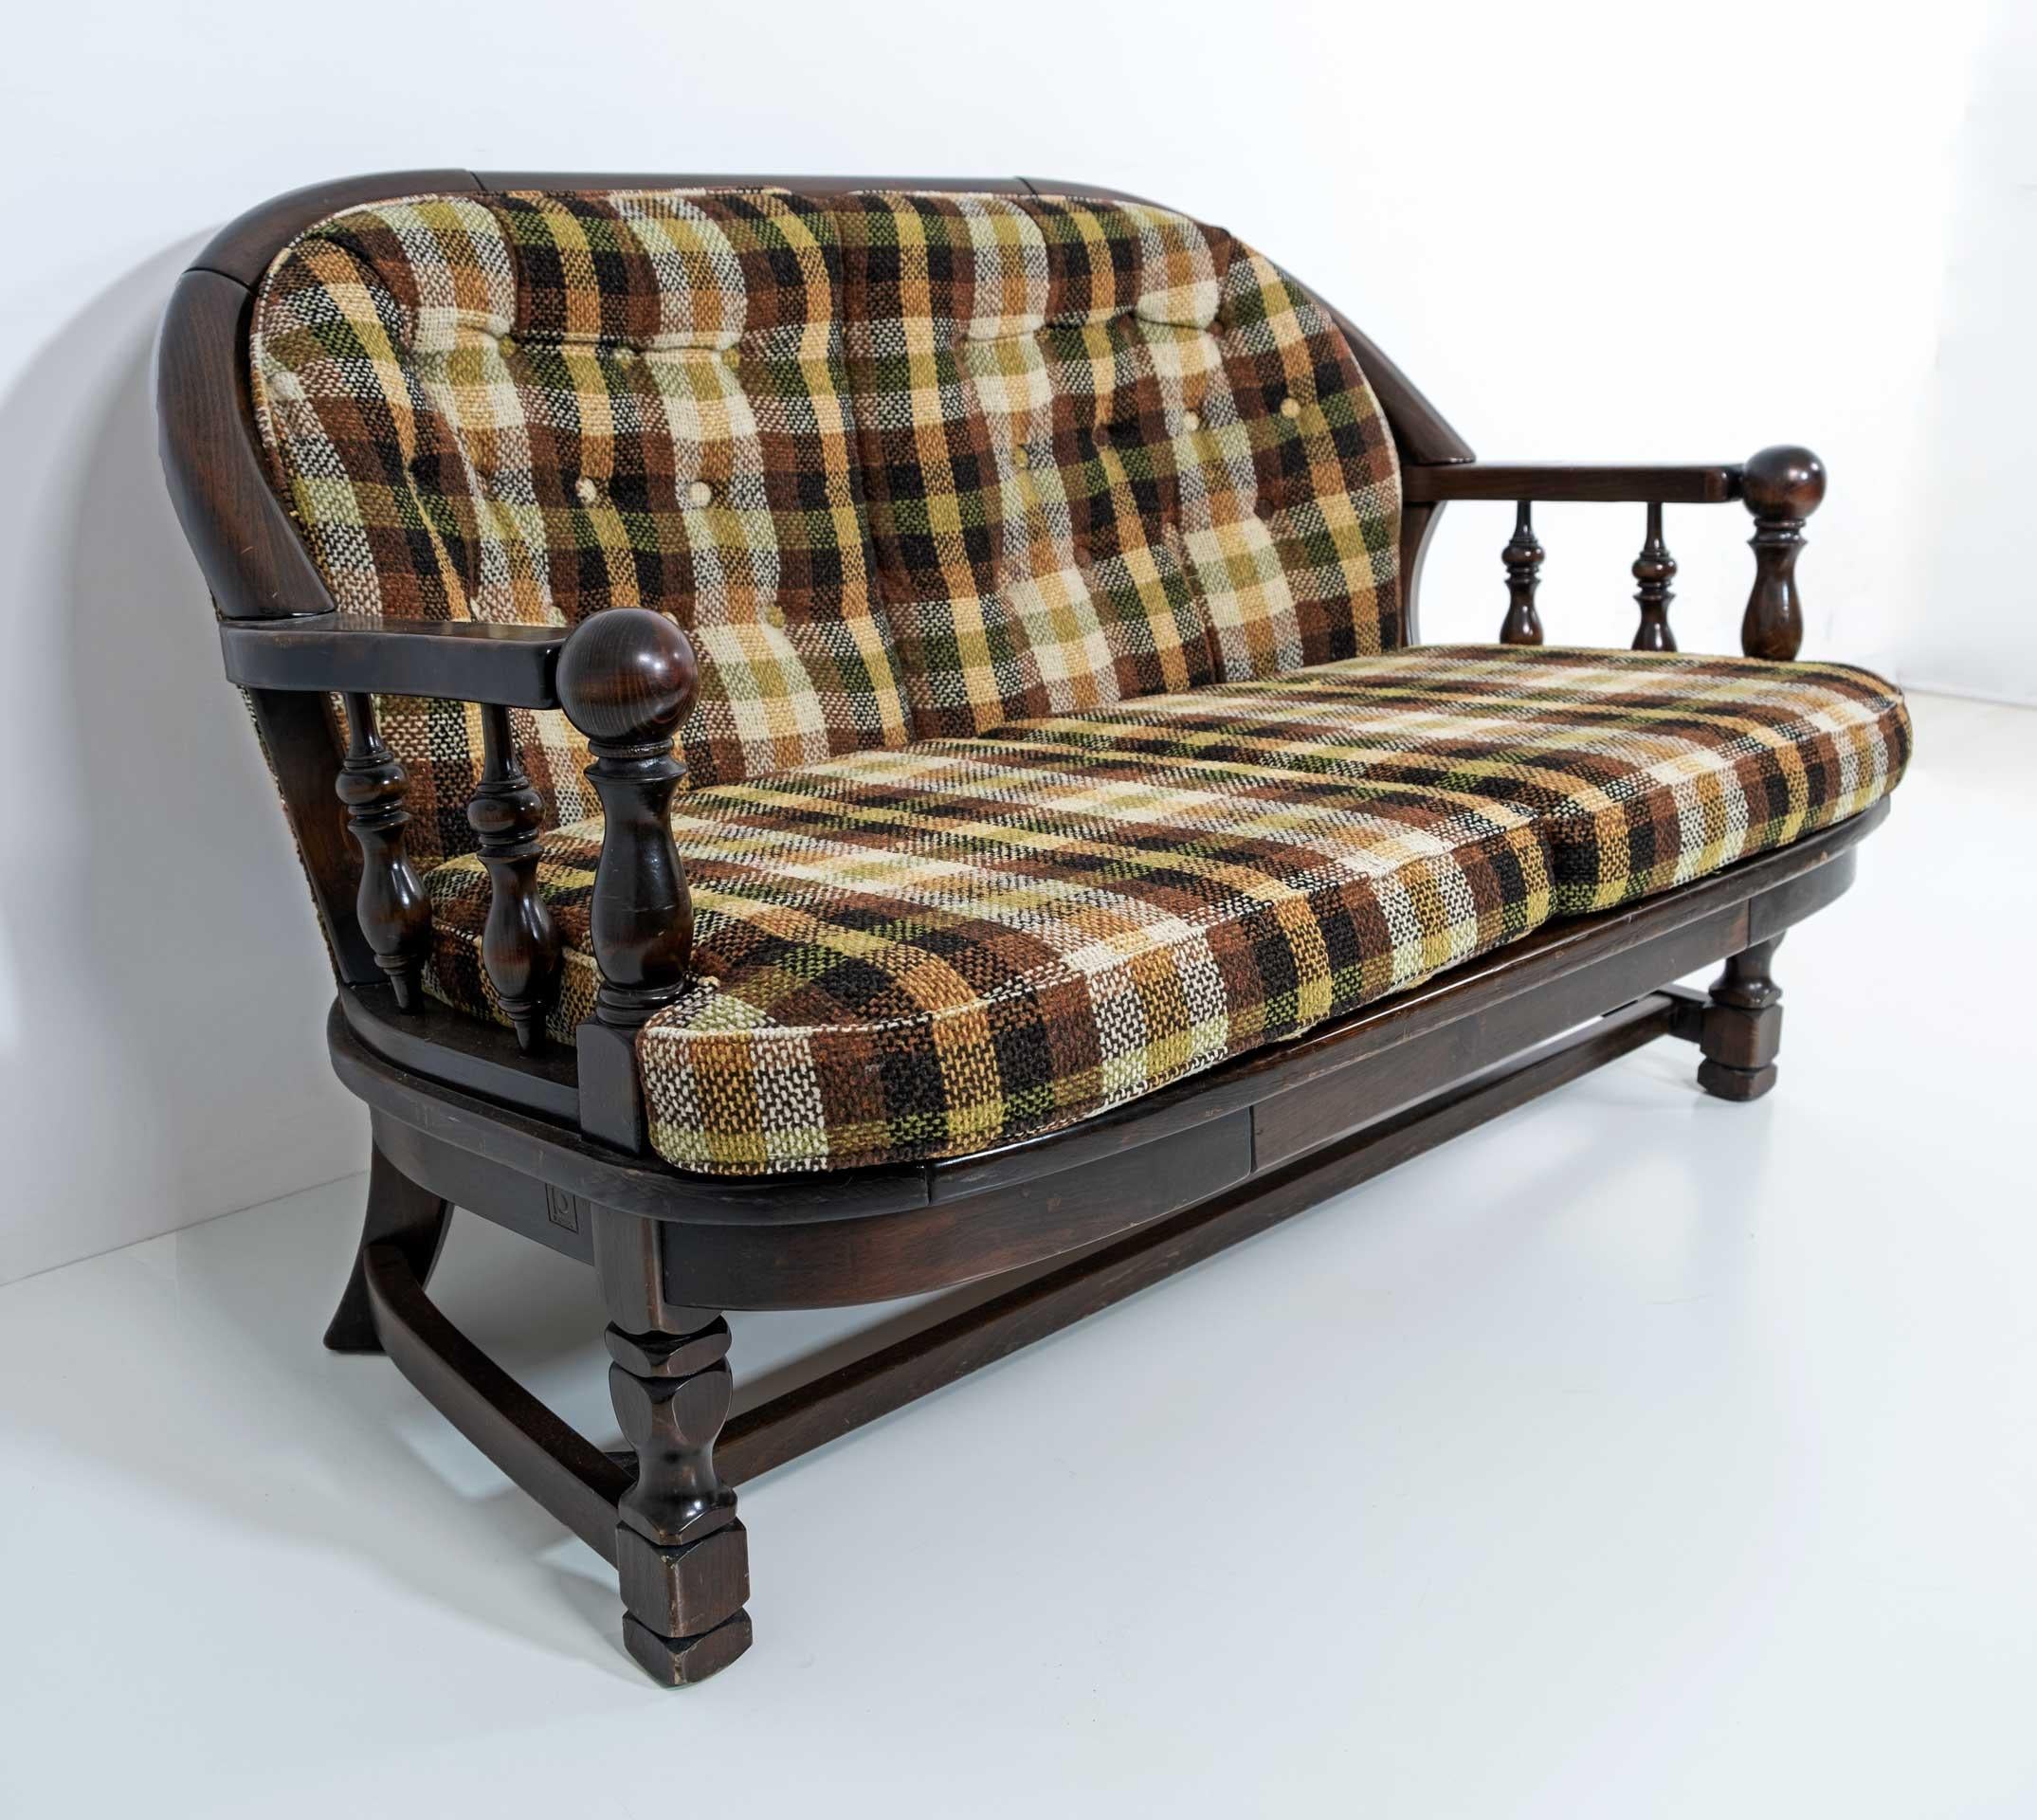 Country style sofa in Scottish fabric, Italian production Industria Della Poltrona Pizzetti Roma. In good condition, as shown in the photos.